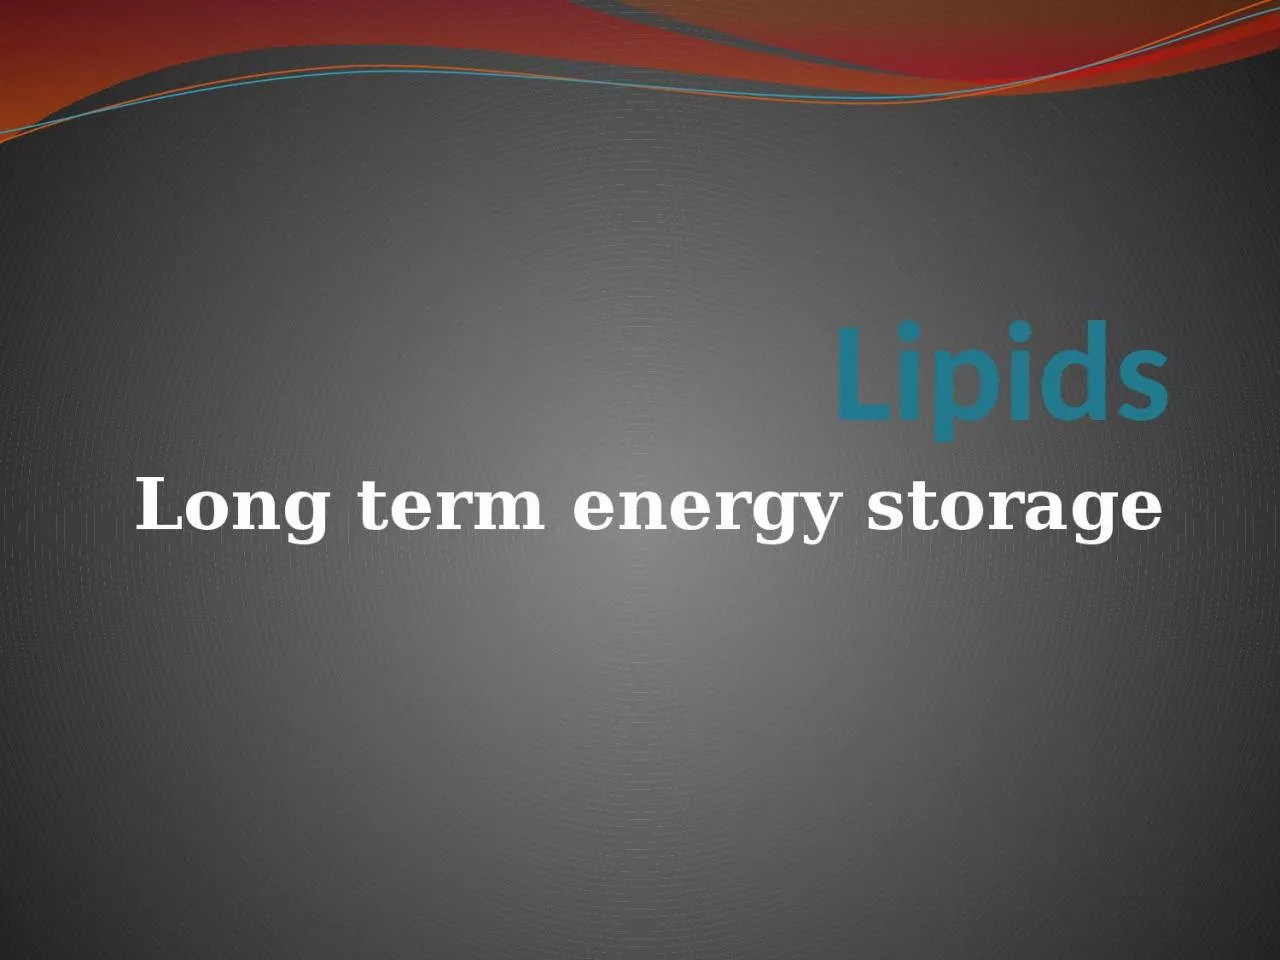 Lipids Long term energy storage